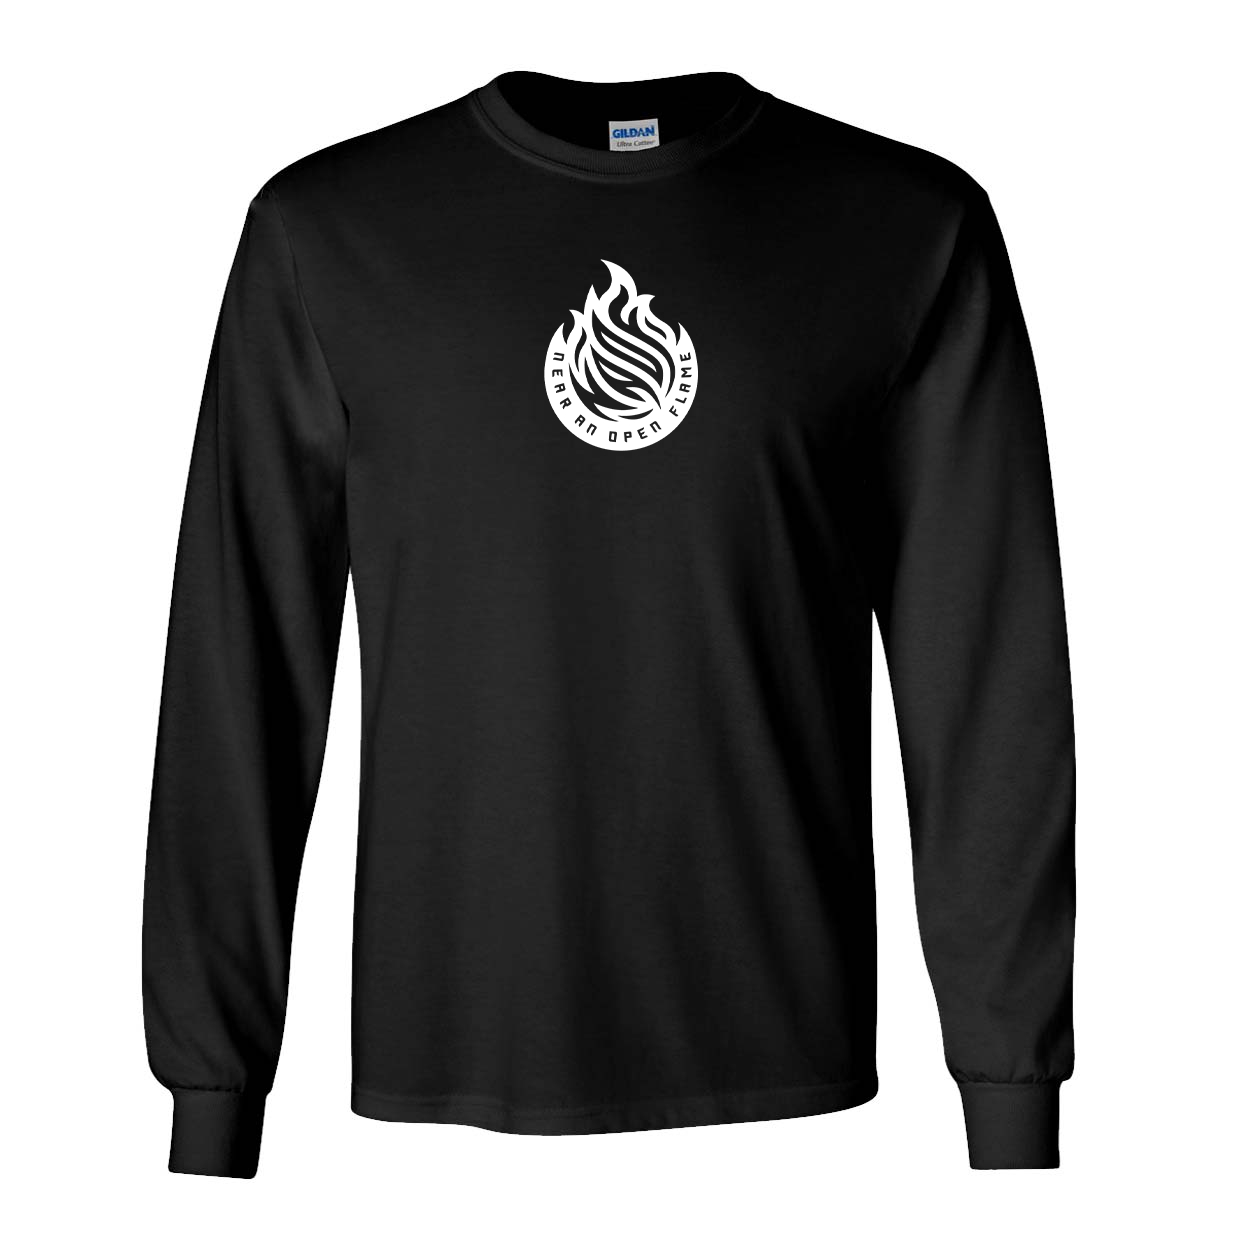 Near An Open Flame Classic Long Sleeve T-Shirt Black (White Logo)